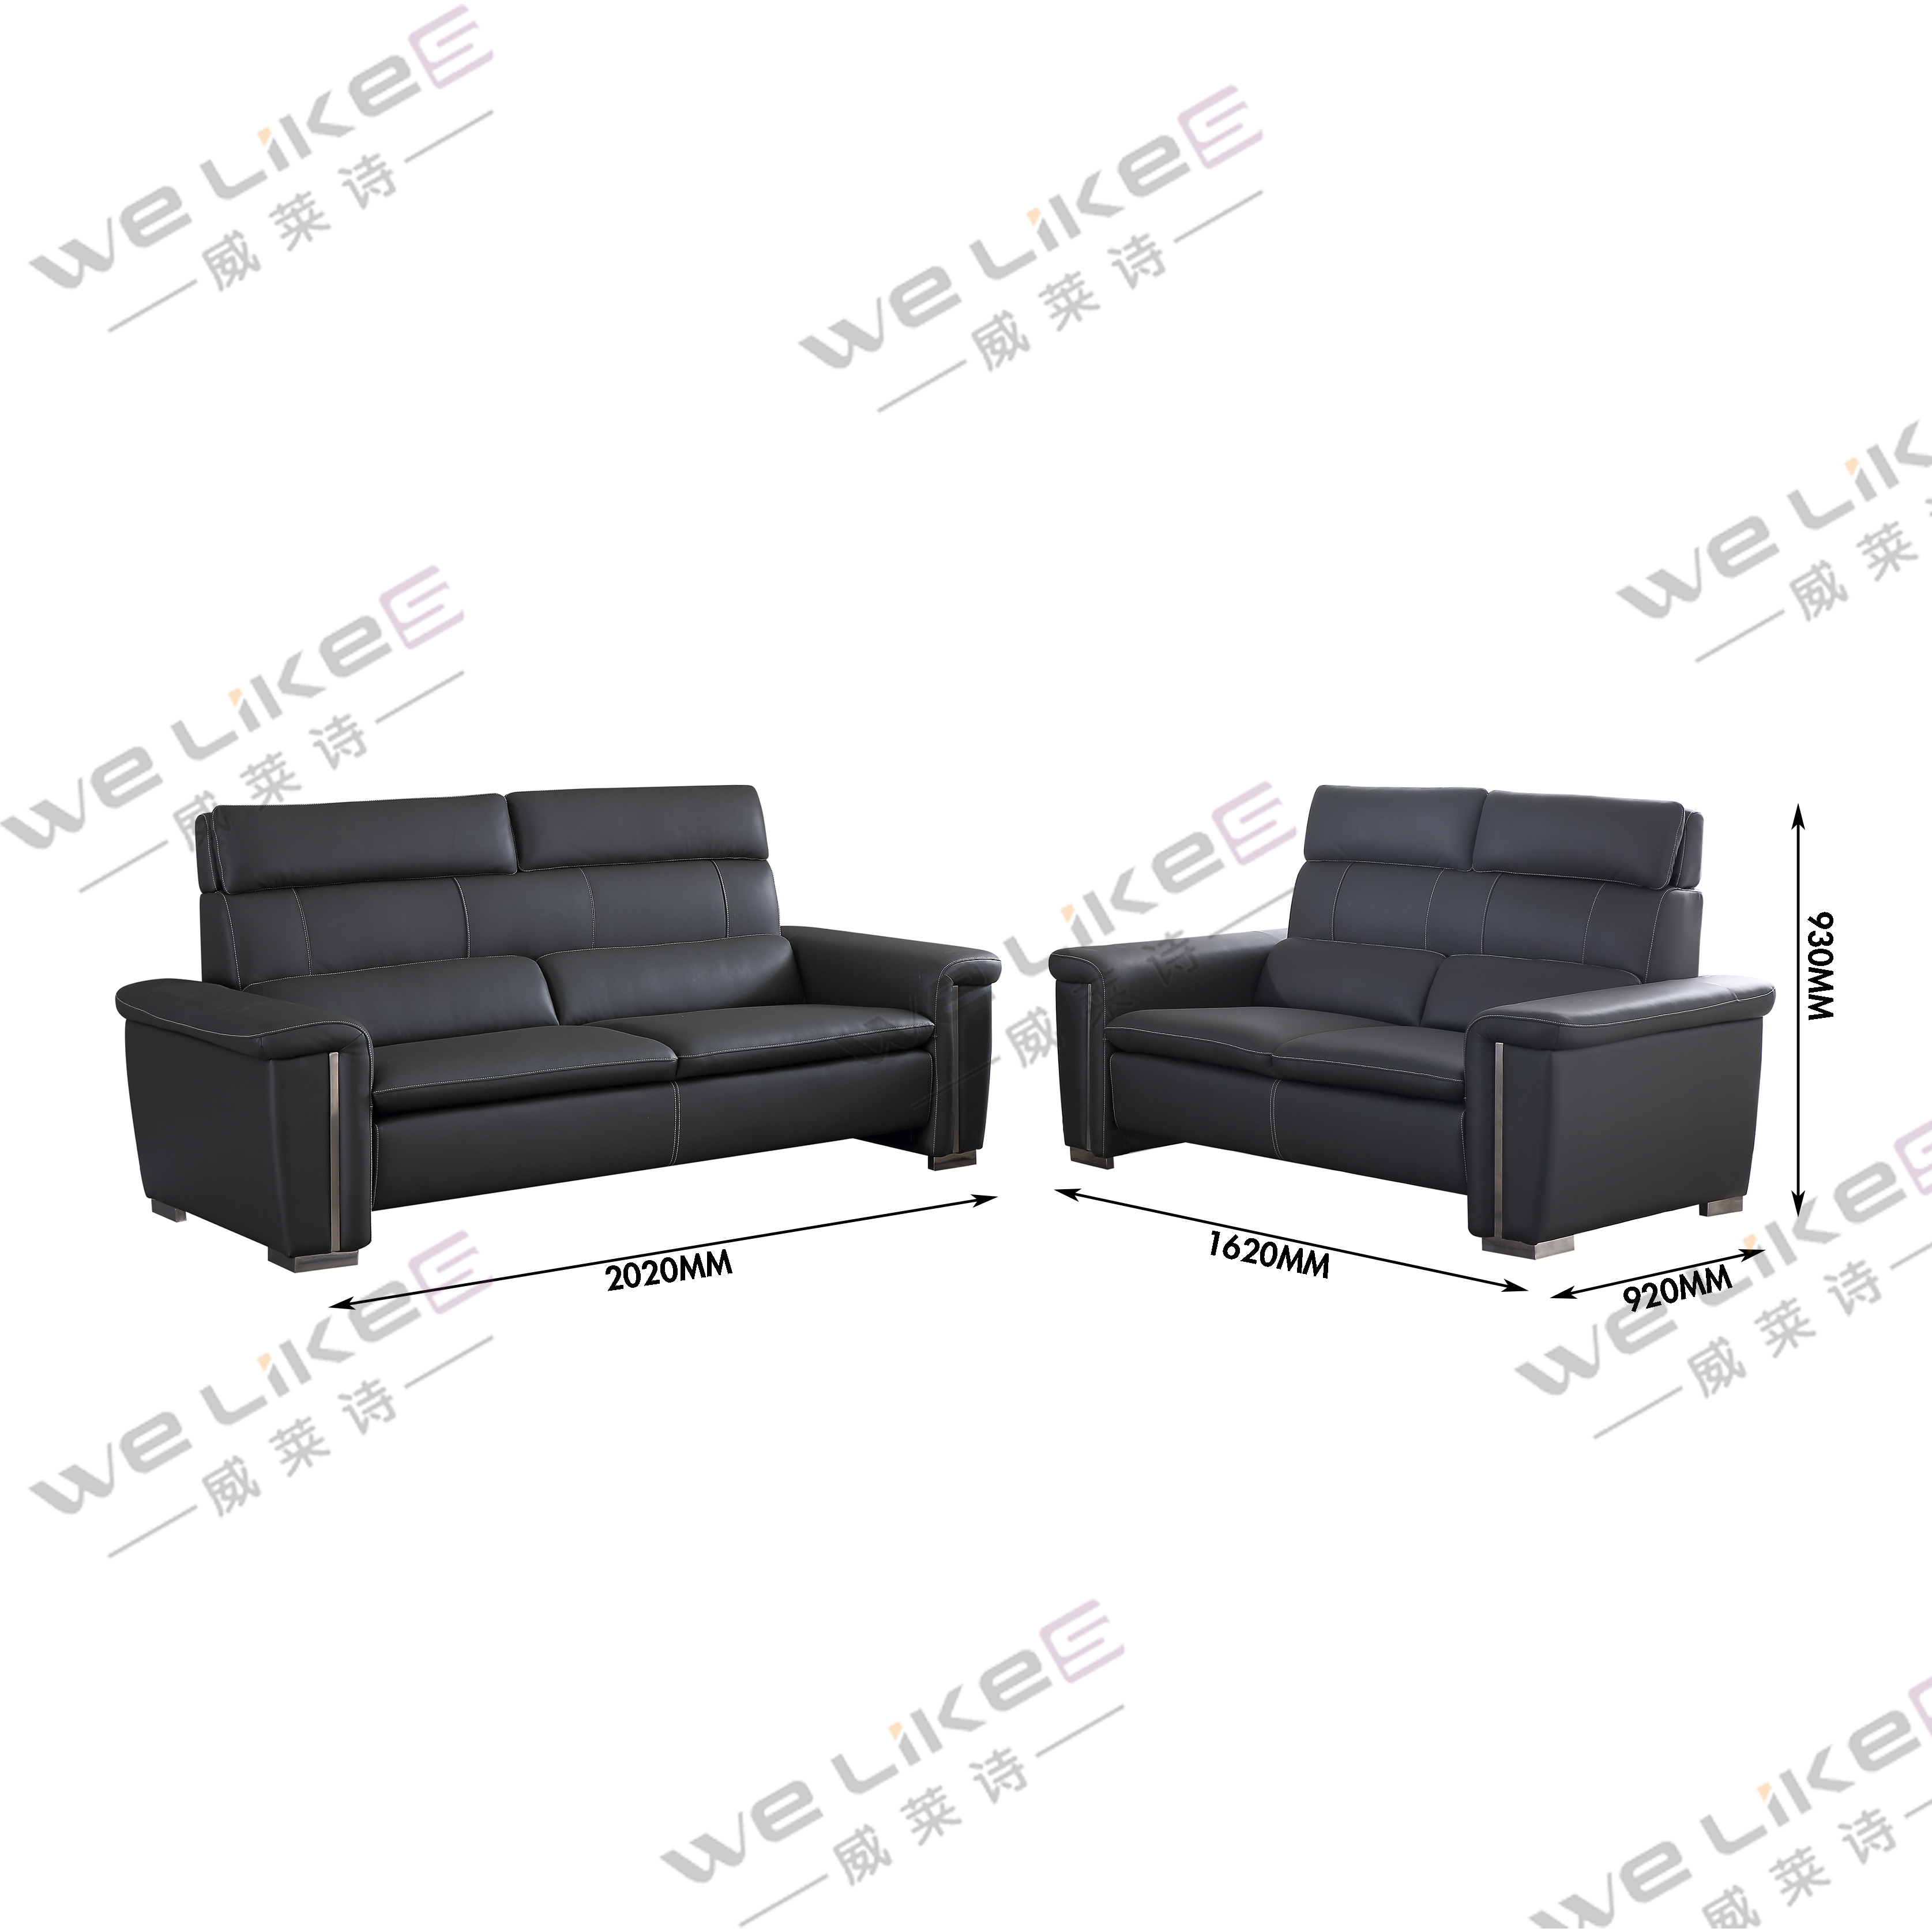 ZM770 Welikes Modern Leather Sofa